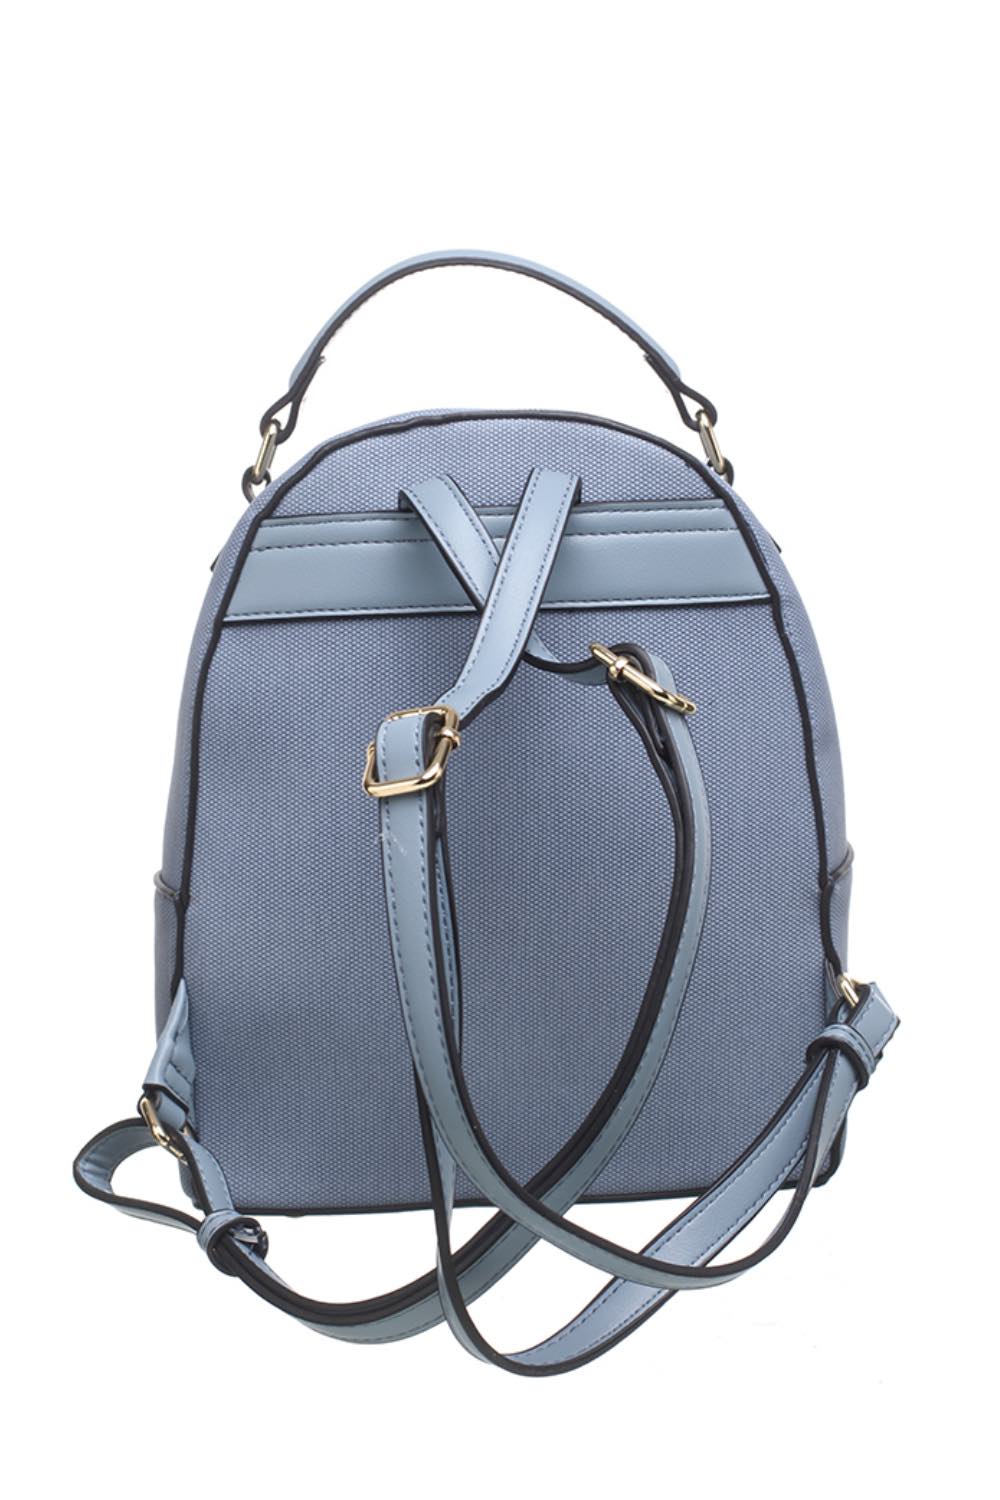 Bessie-blue-midi-ruck-sack-with-front-purse-pocket-djv-boutique